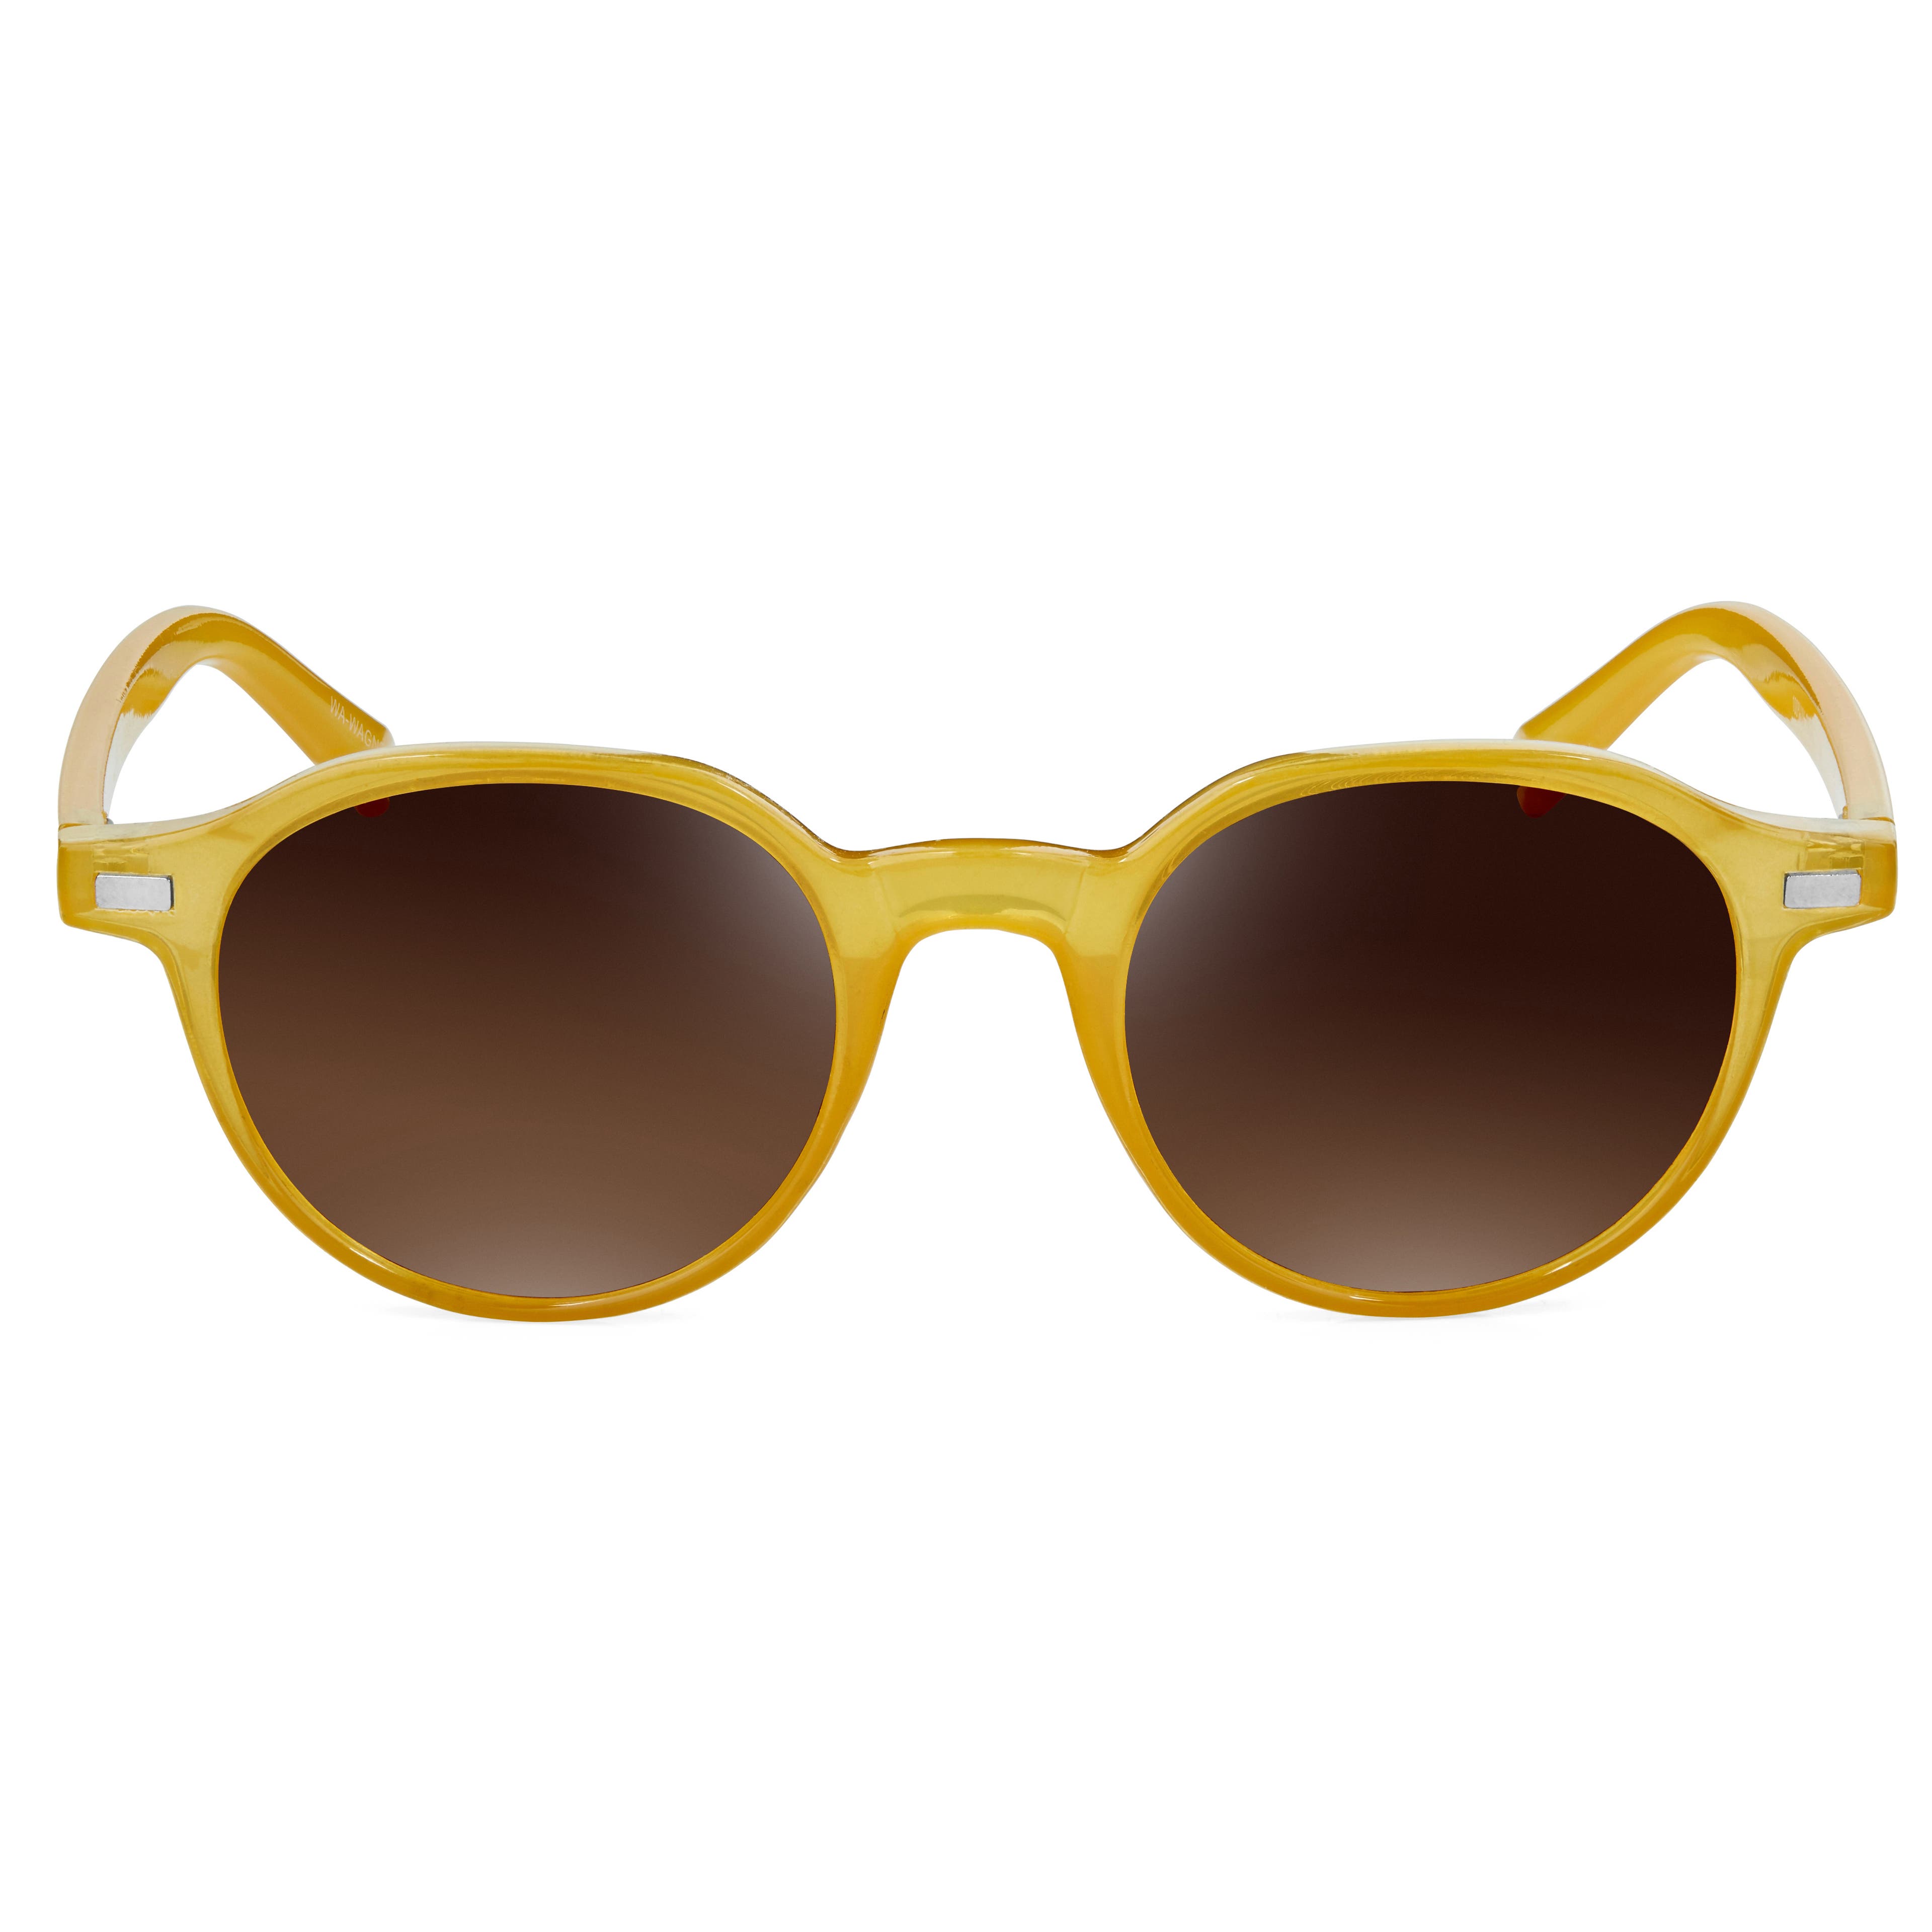 Слънчеви очила Wagner с жълти рамки и кафяви стъкла